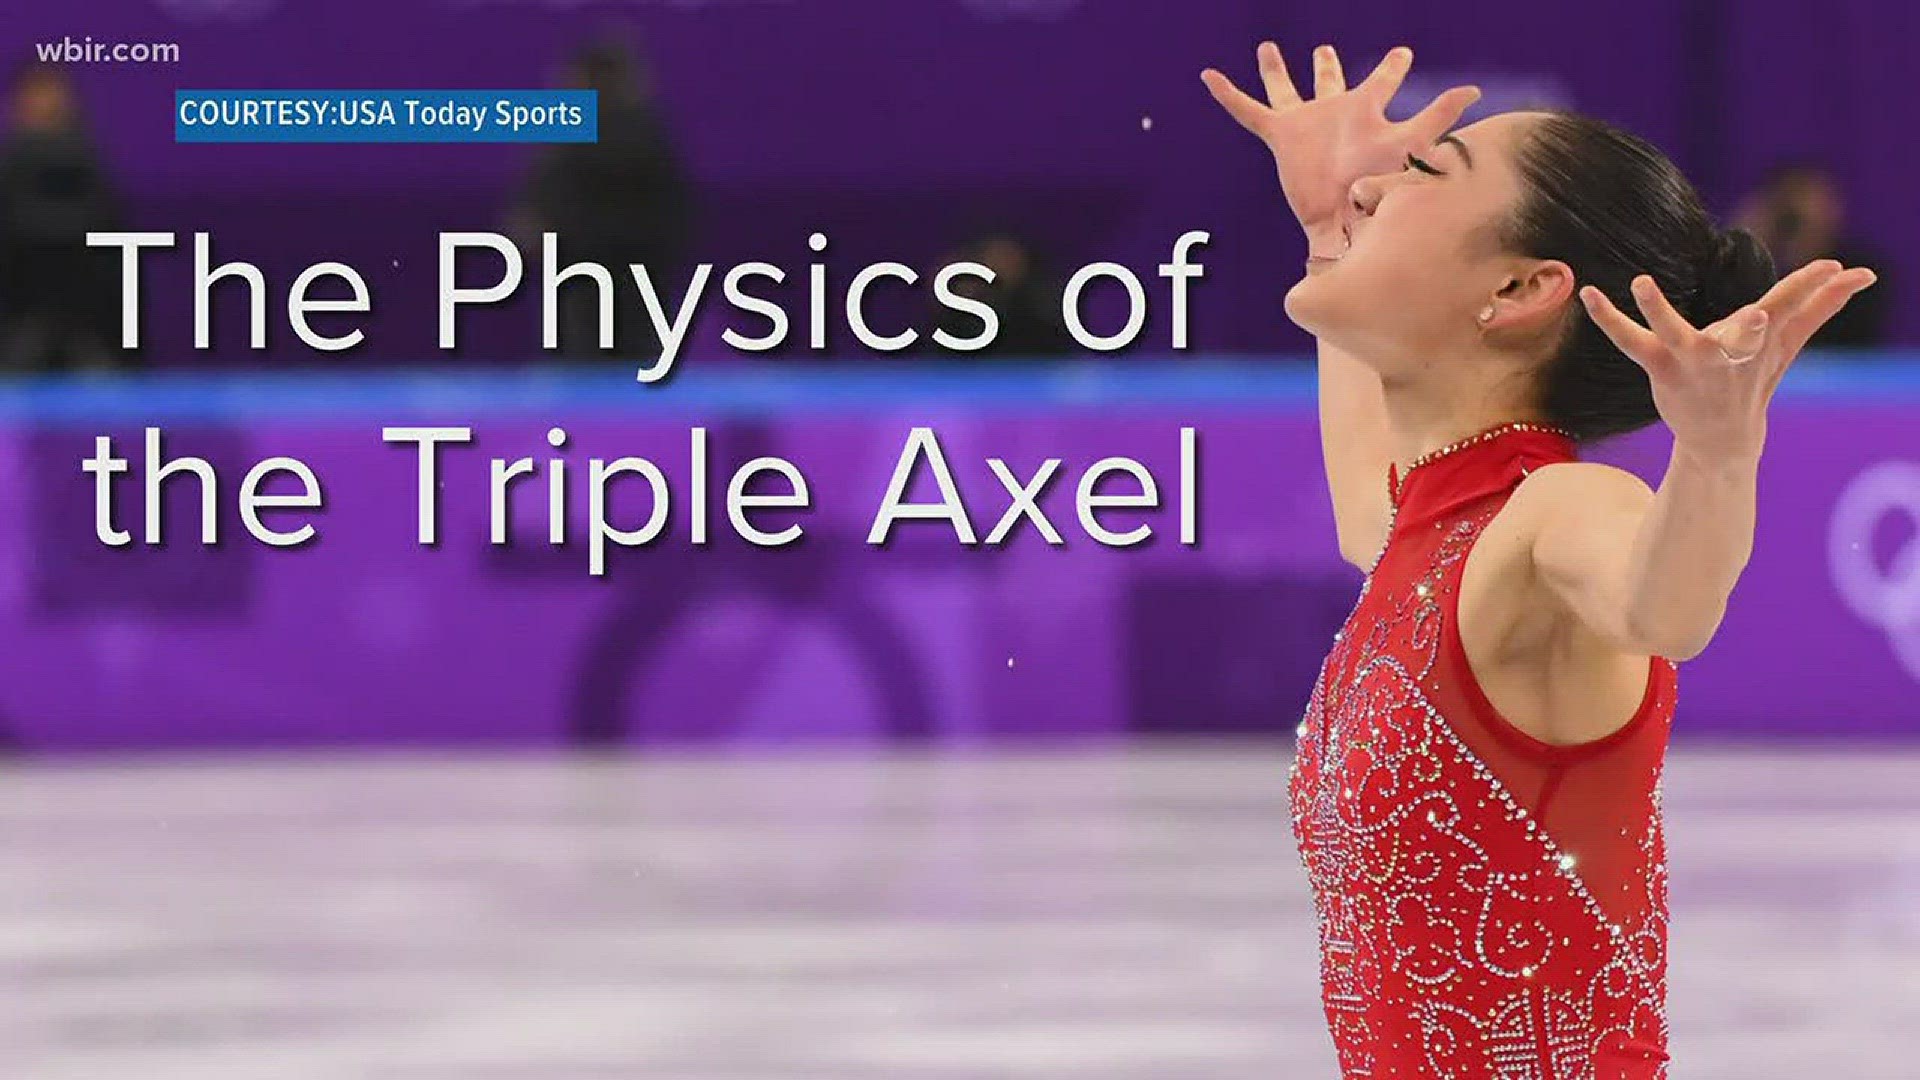 L&N Stem Academy junior Sonaz Jazny explains the physics behind Mirai Nagasu's triple axel.